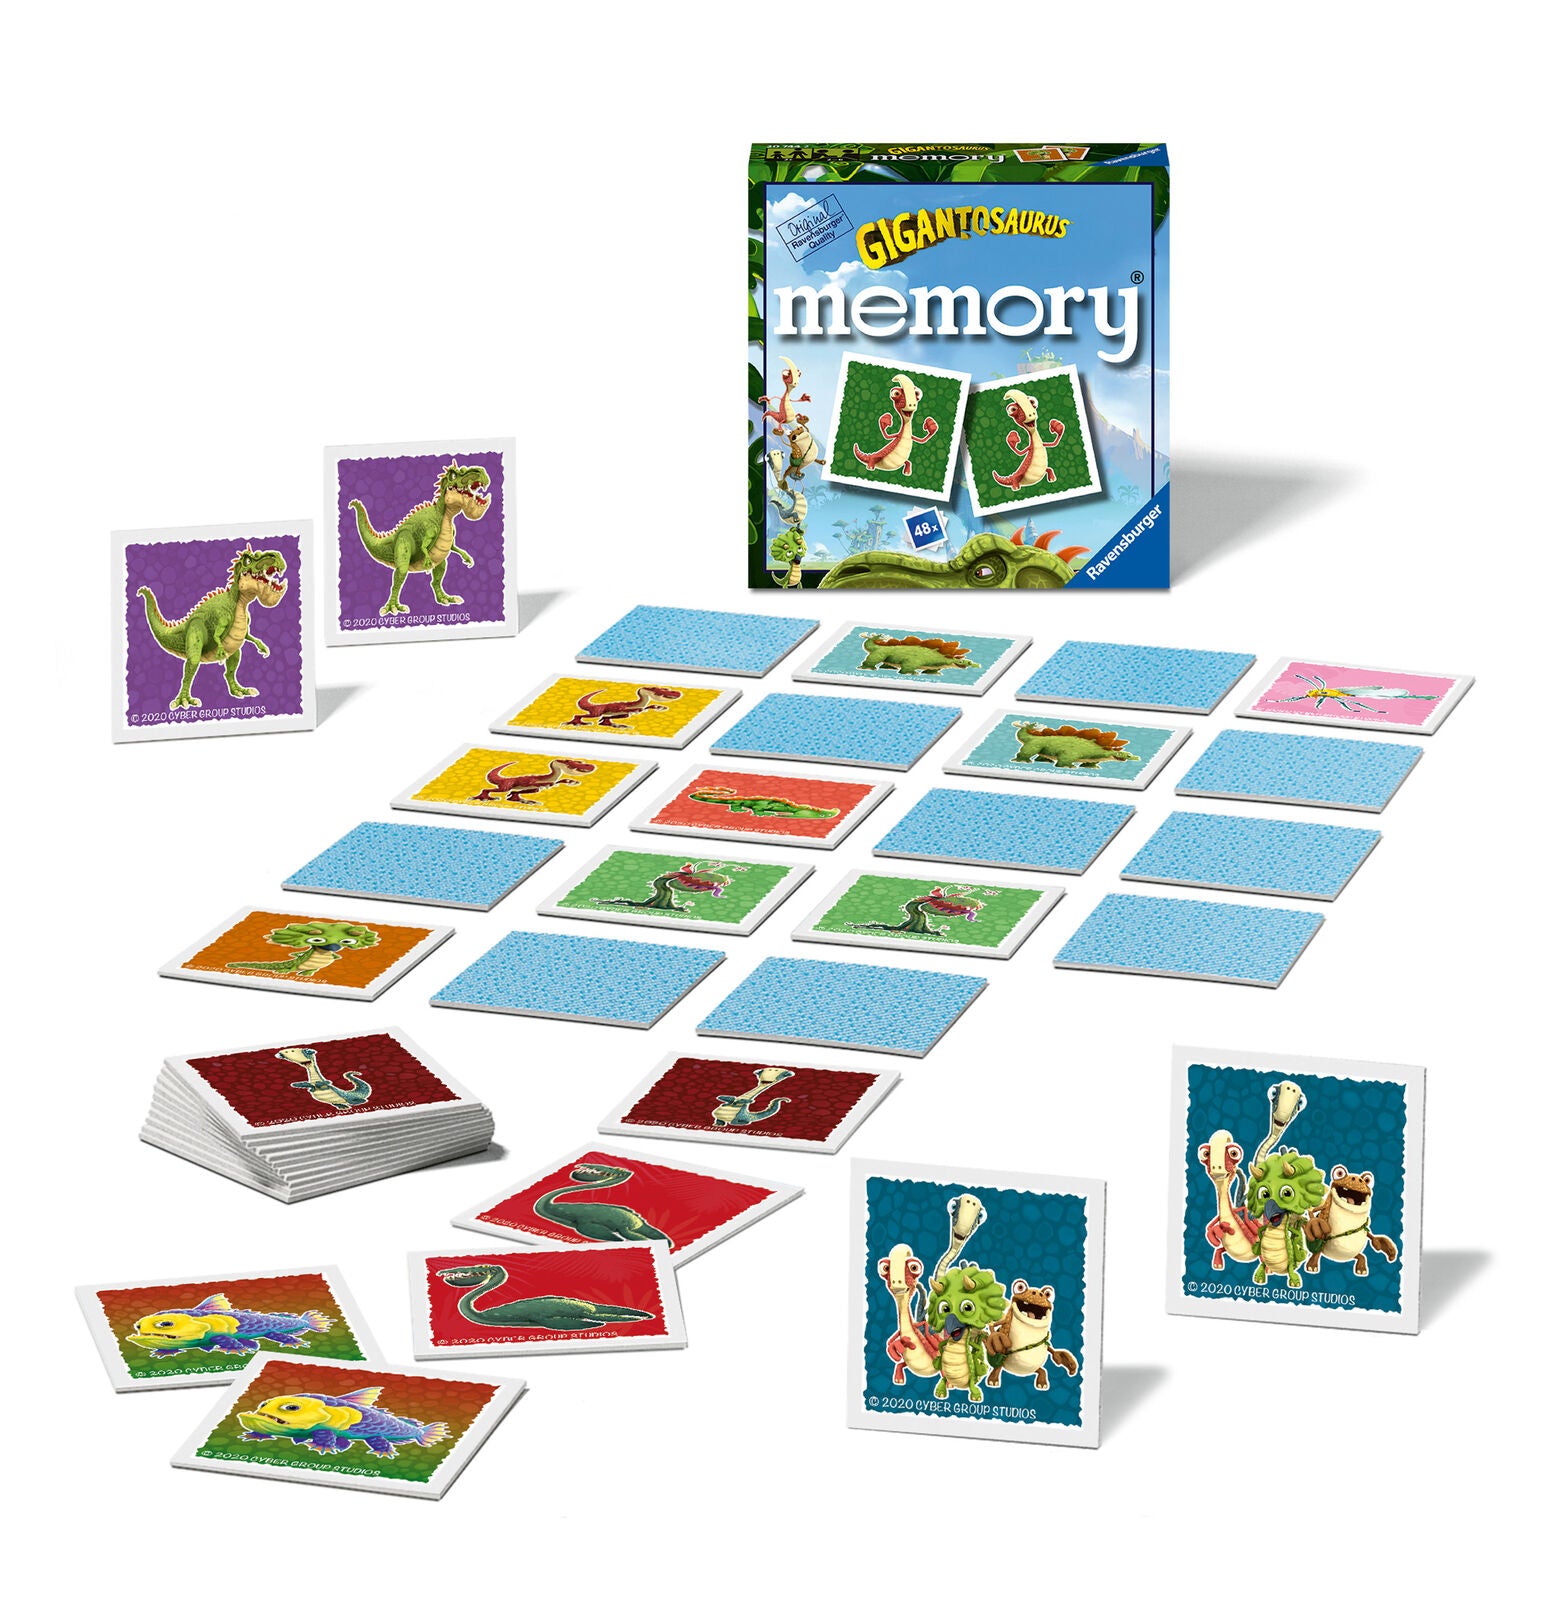 20744 Ravensburger Gigantosaurus Dinosaur Mini Memory Snap Pairs Game Children 3